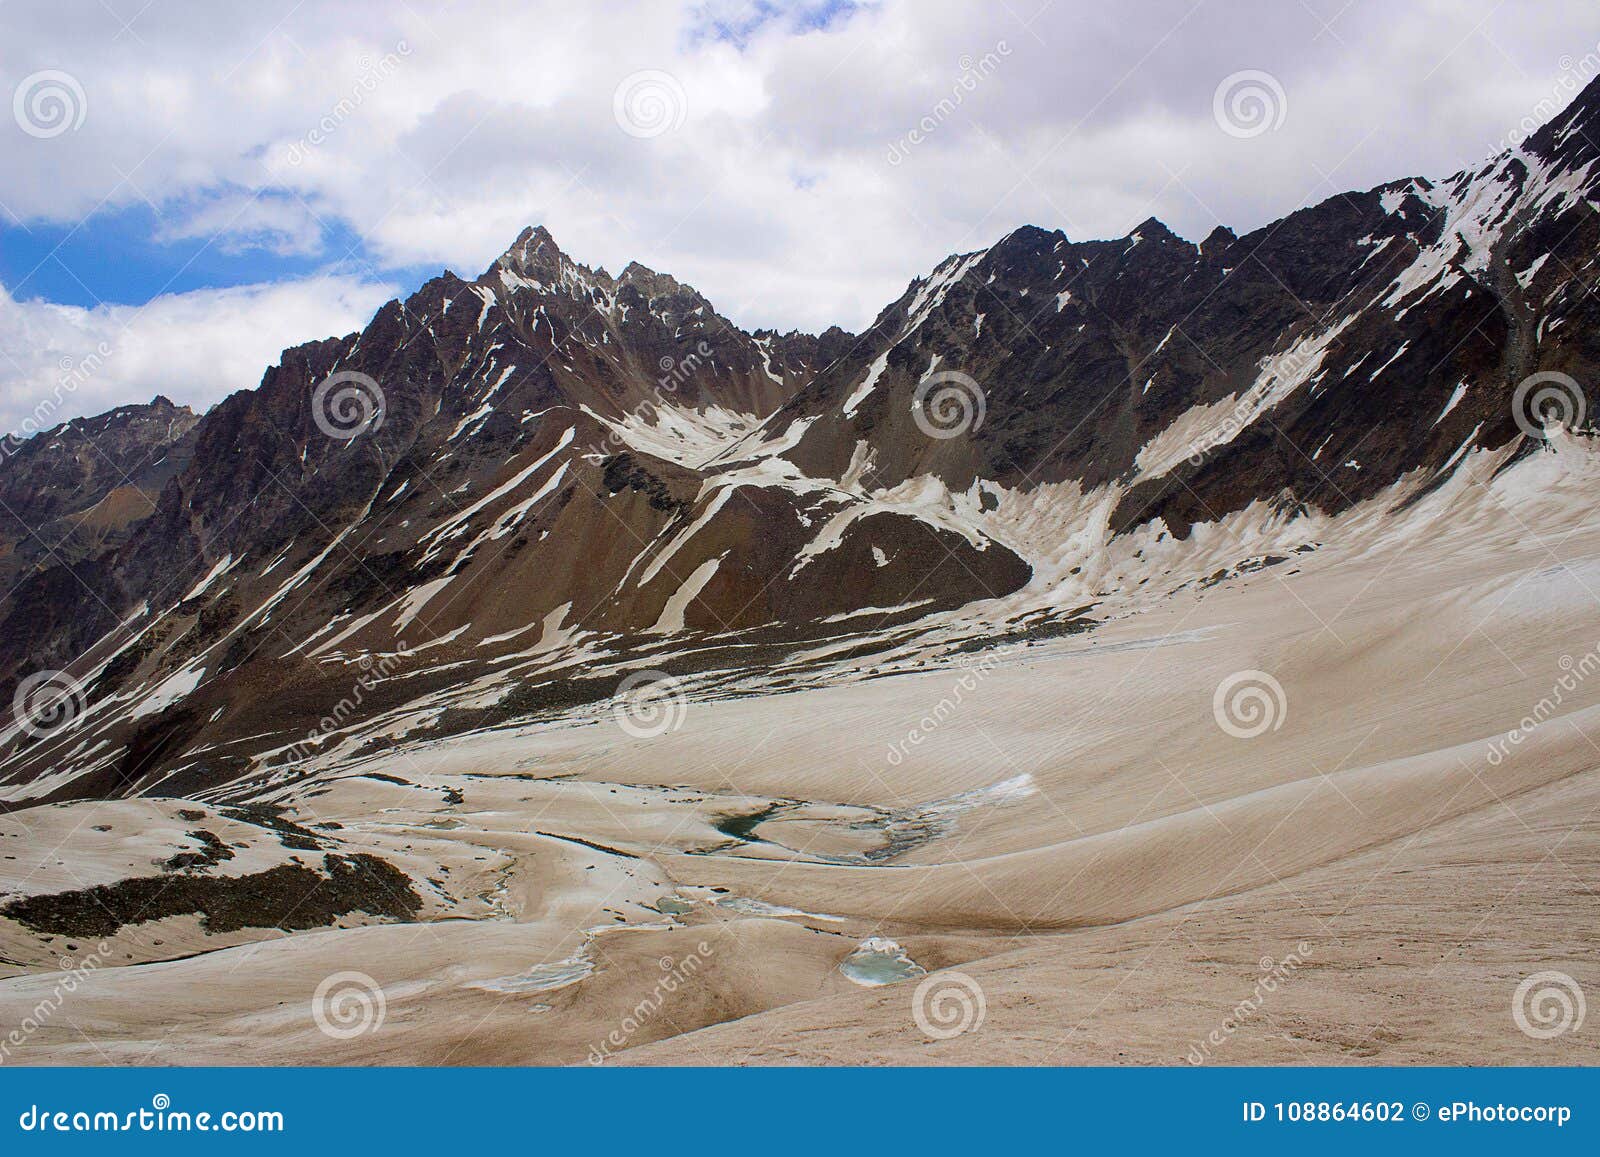 peaks of snowclad mountains. himachal pradesh